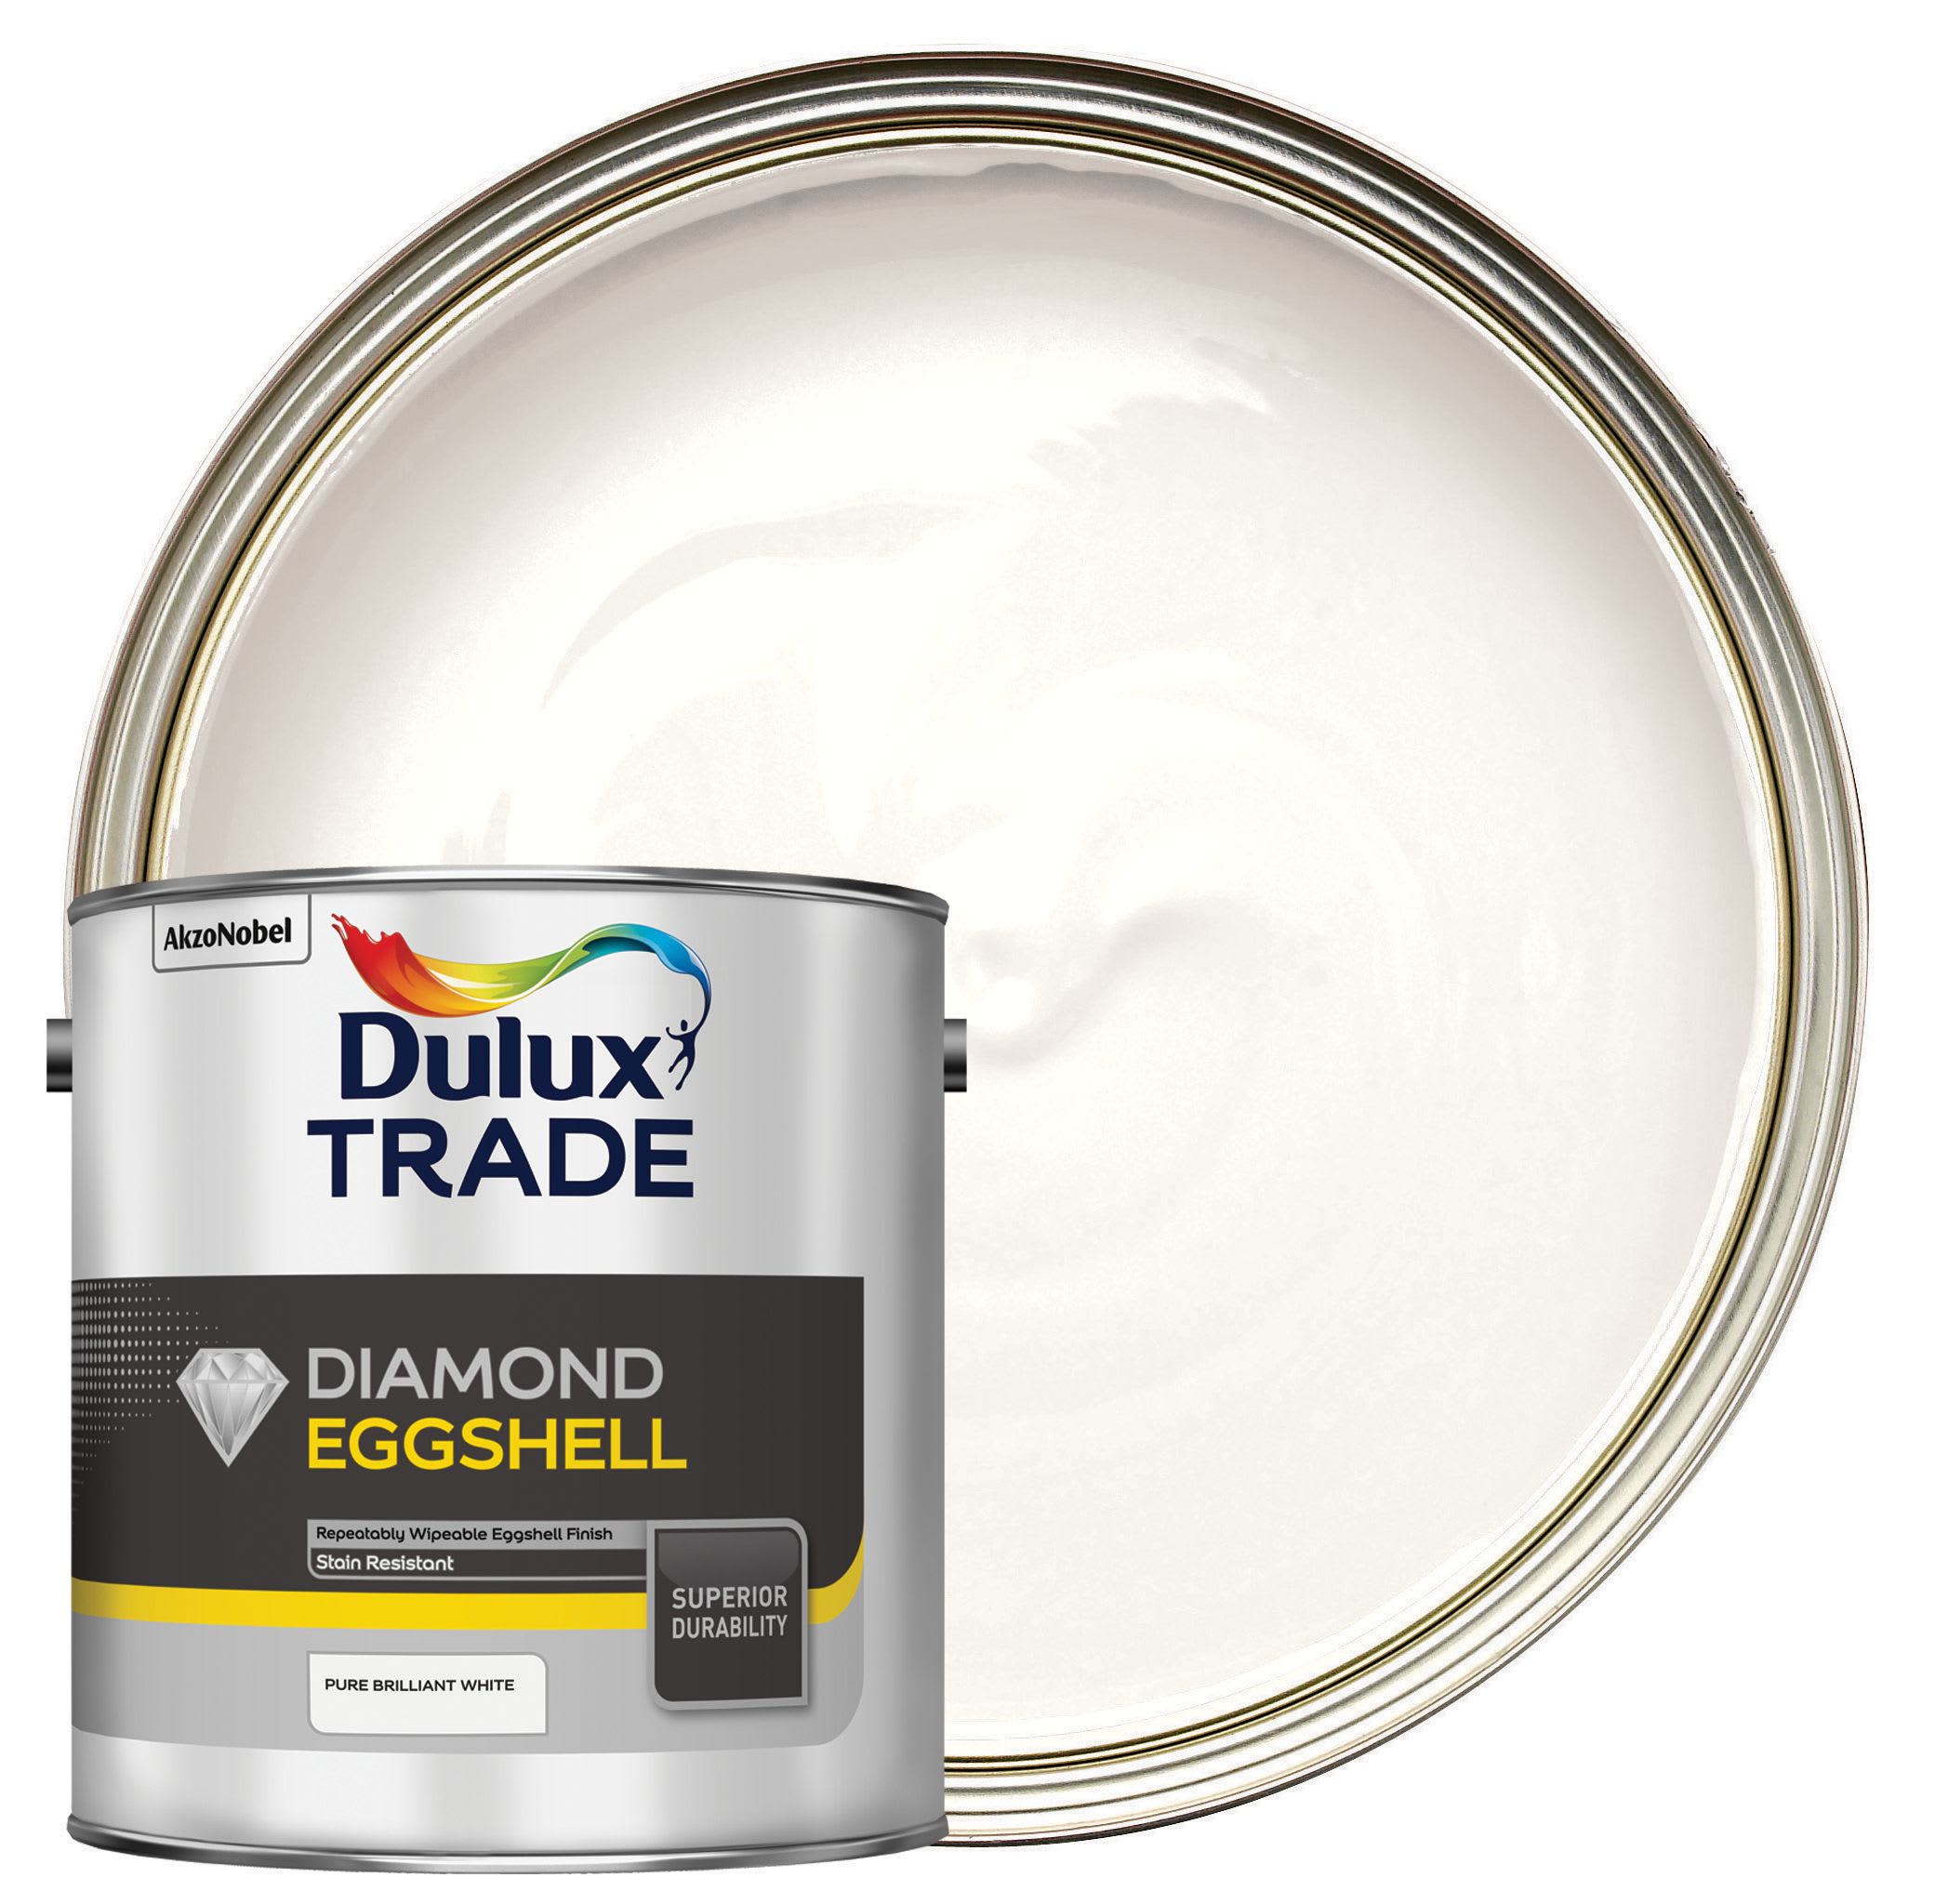 Dulux Trade Diamond Eggshell Emulsion Paint - Pure